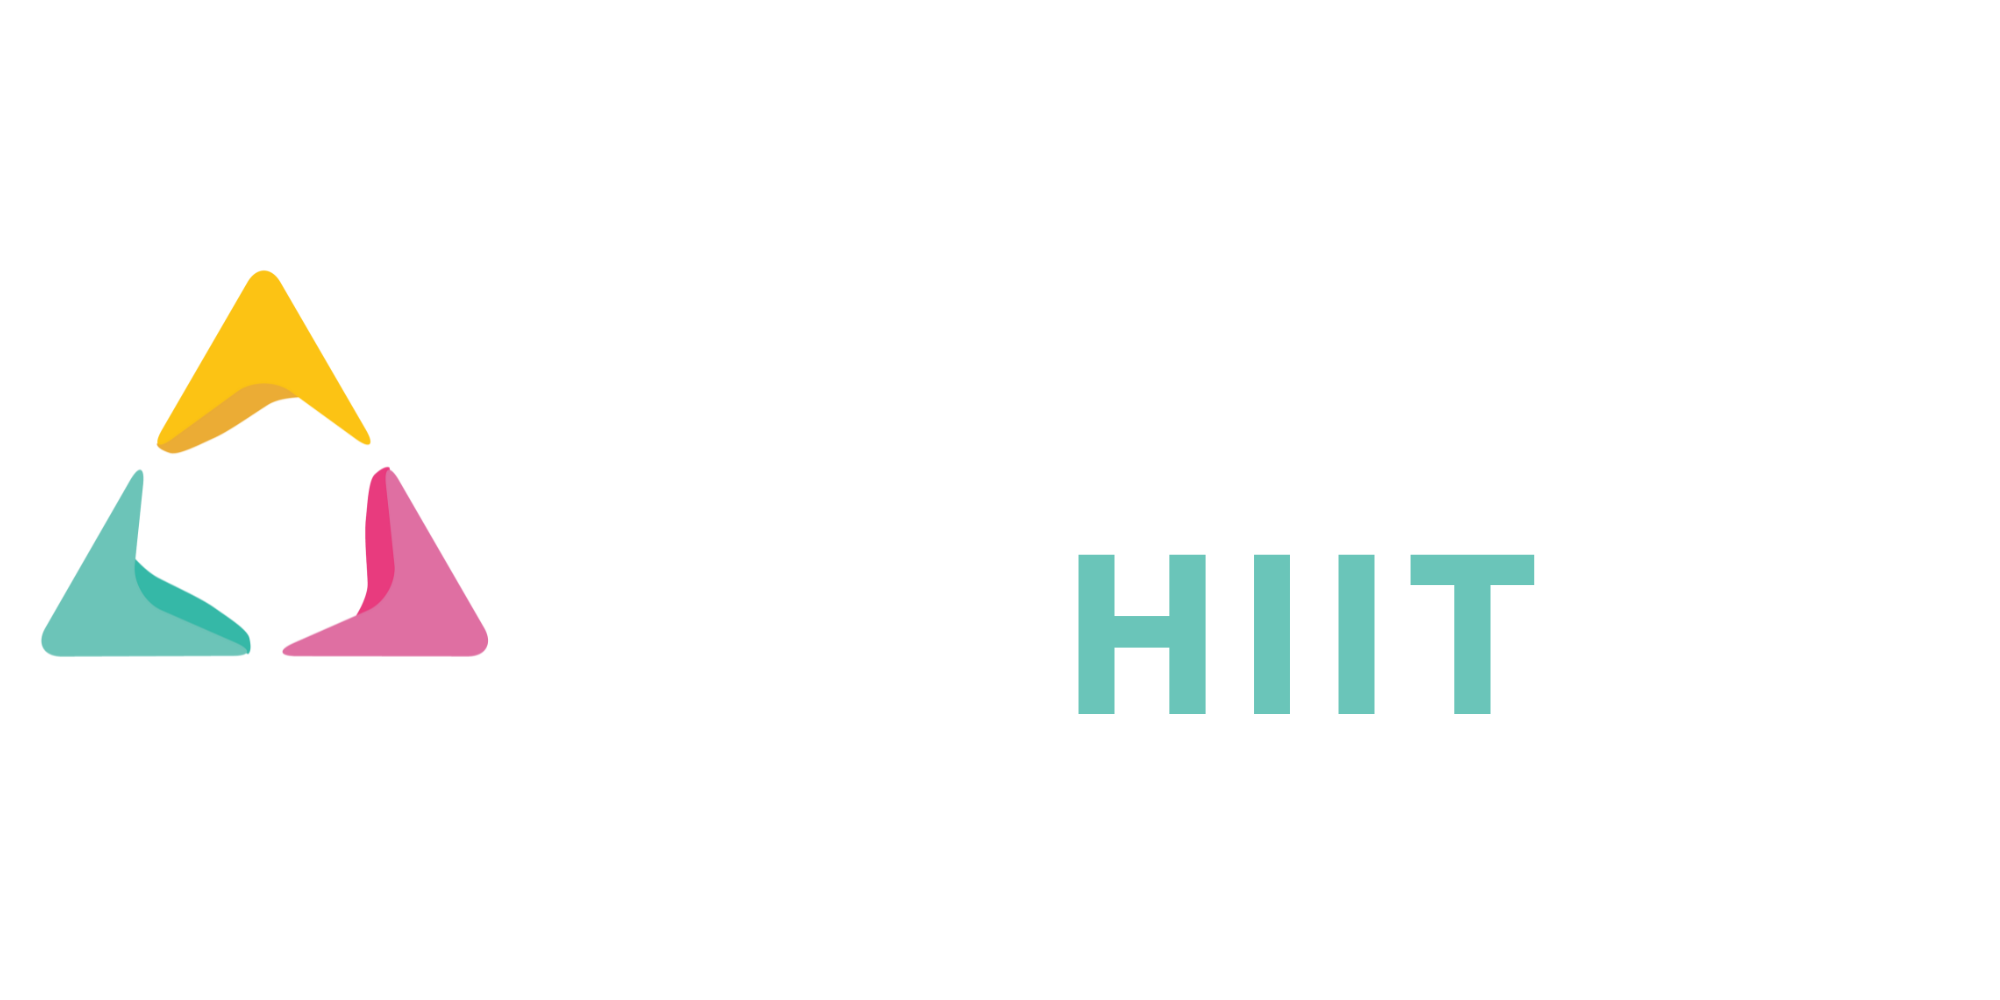 Recruitment HIIT